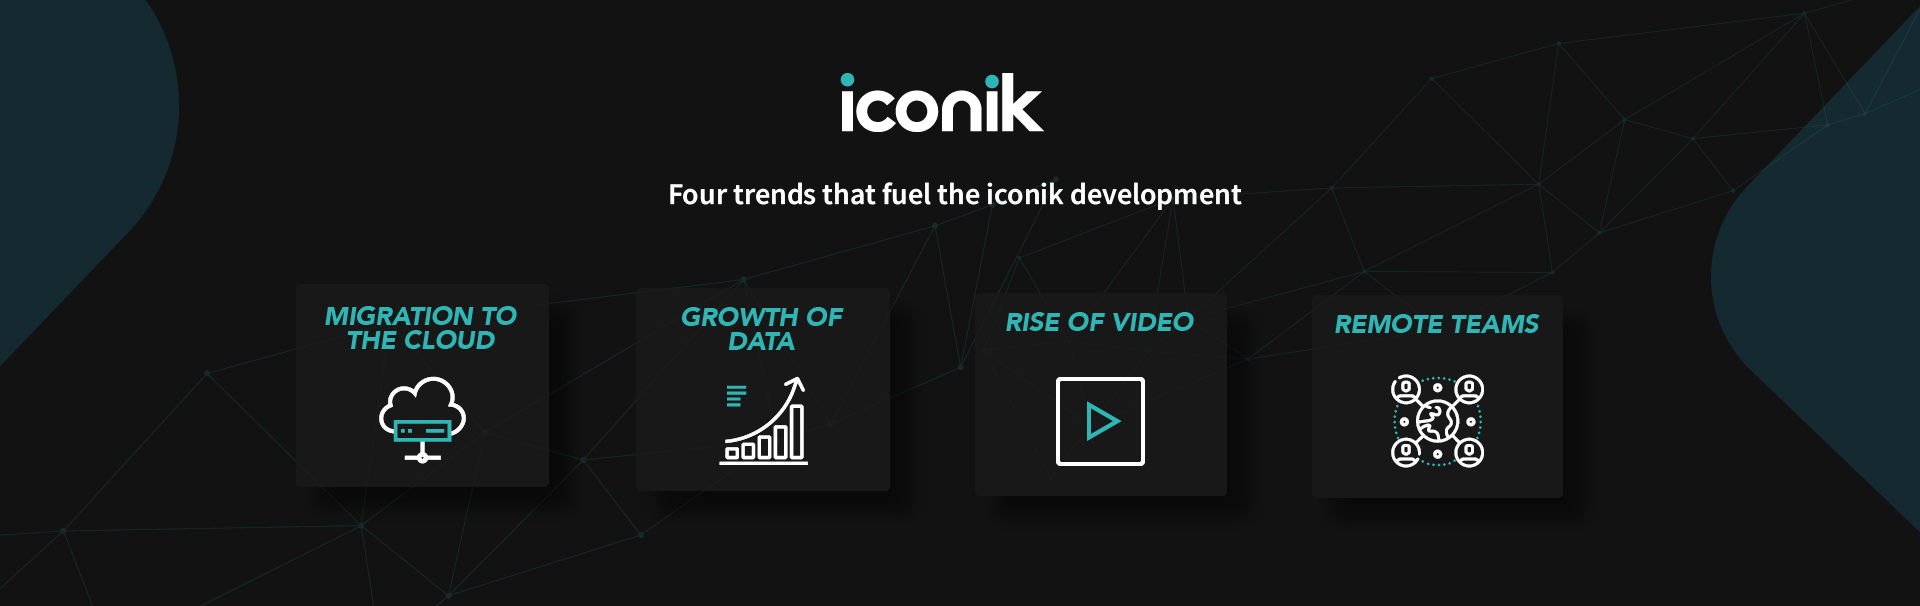 Market trends behind iconik